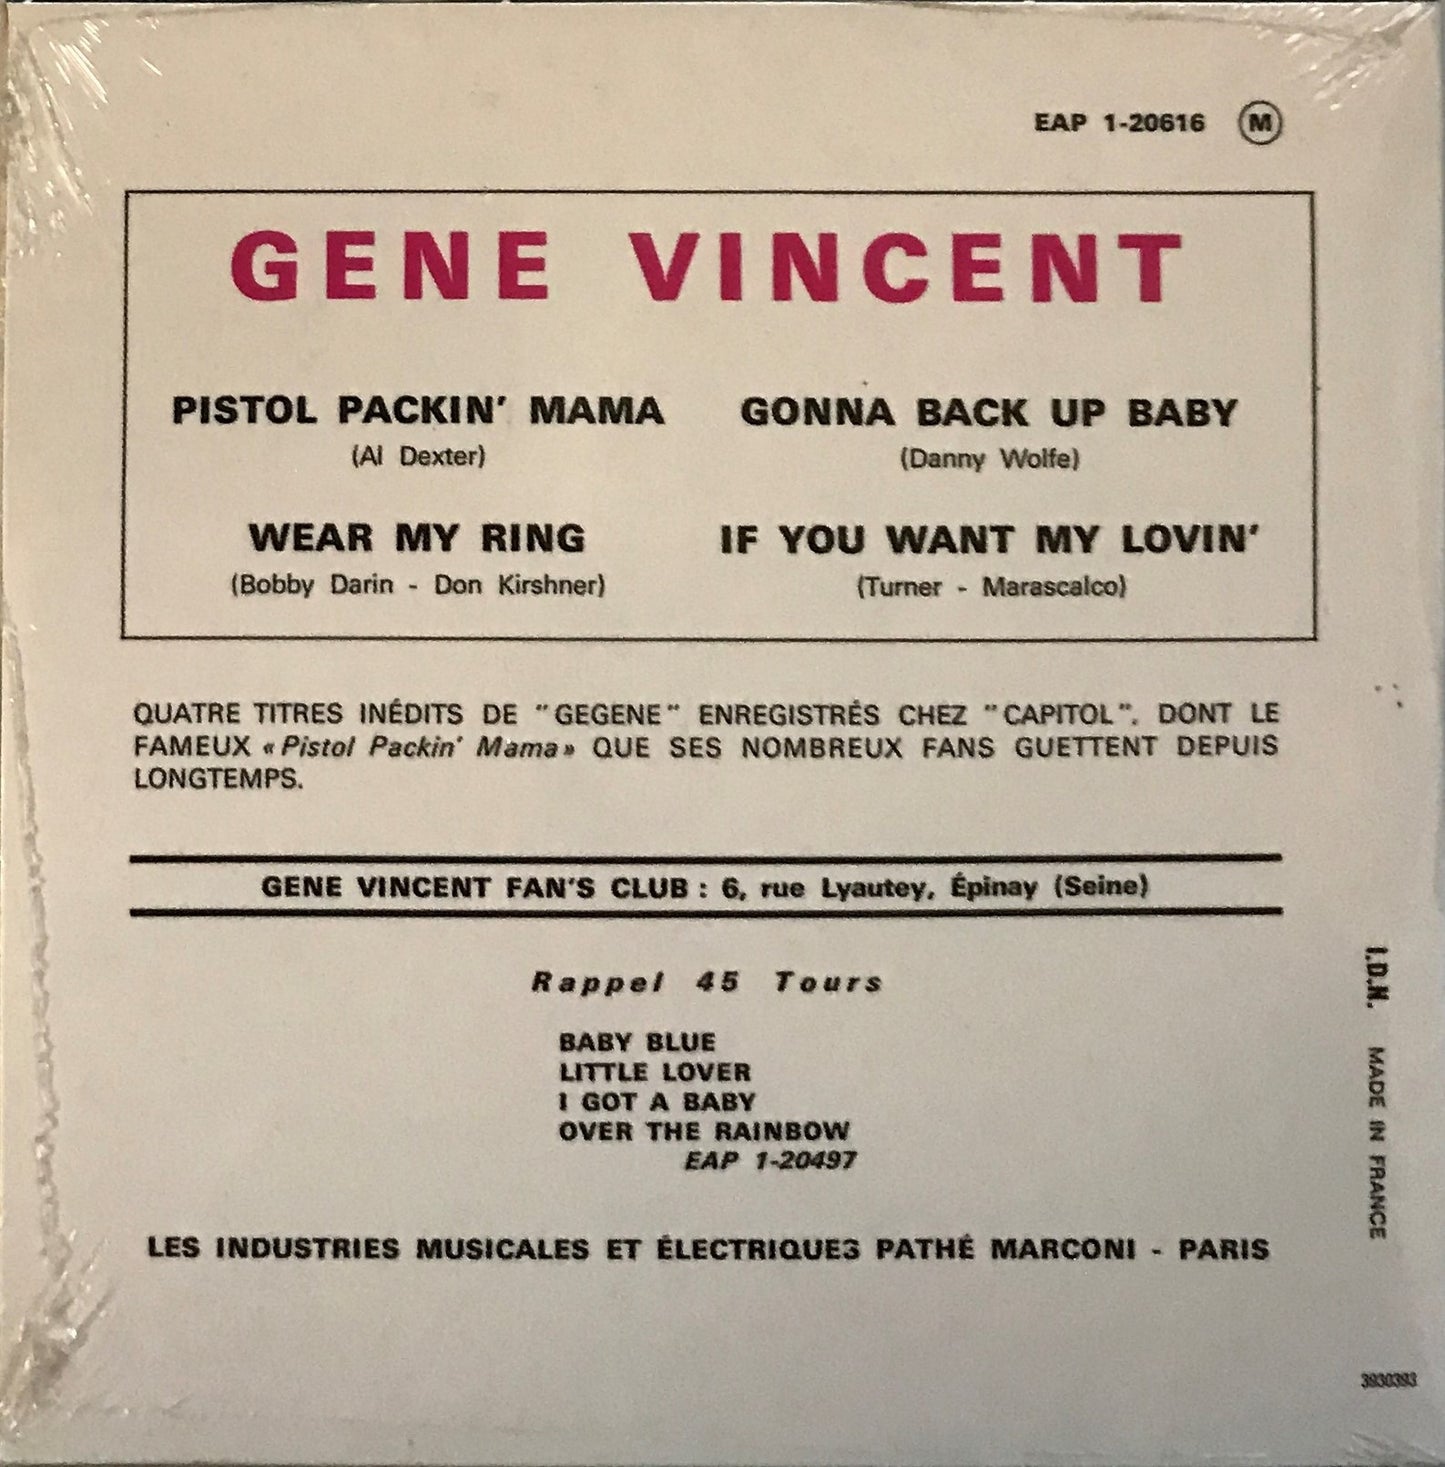 CD-Single - Gene Vincent - Pistol Packin' Mama